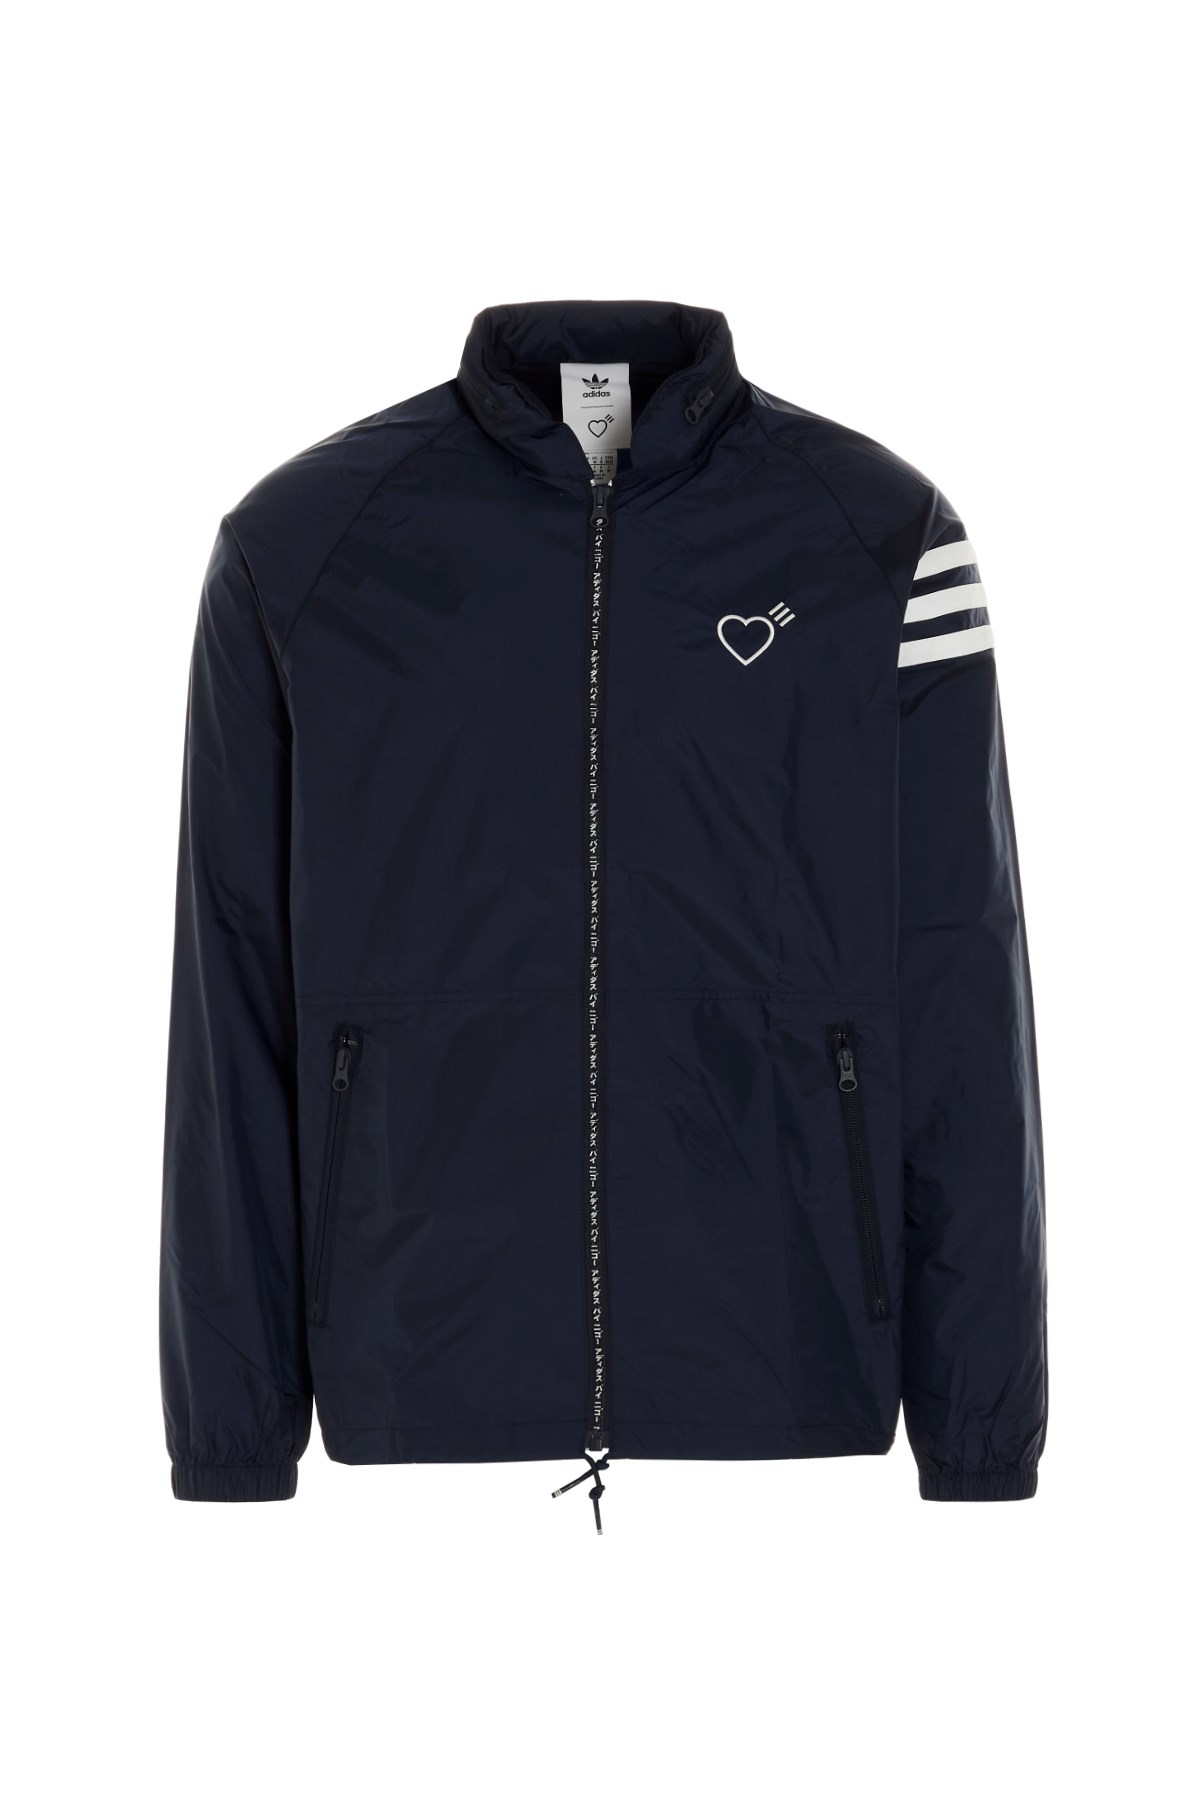 ADIDAS STATEMENT Adidas Statement ‘Windbreaker Hm’ Hooded Jacket In Co